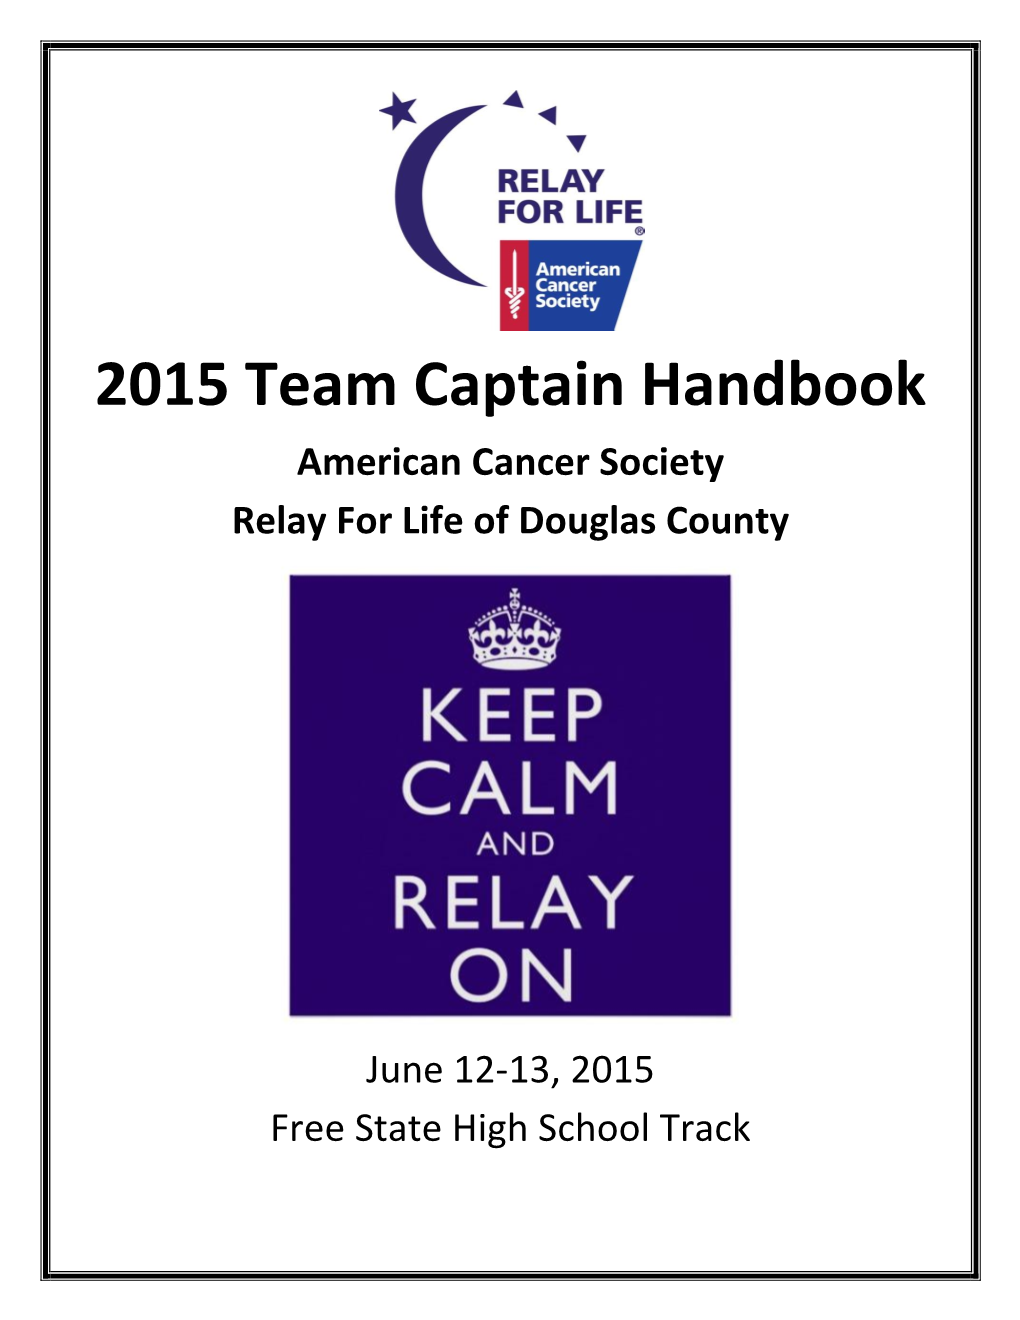 2015 Team Captain Handbook American Cancer Society Relay for Life of Douglas County